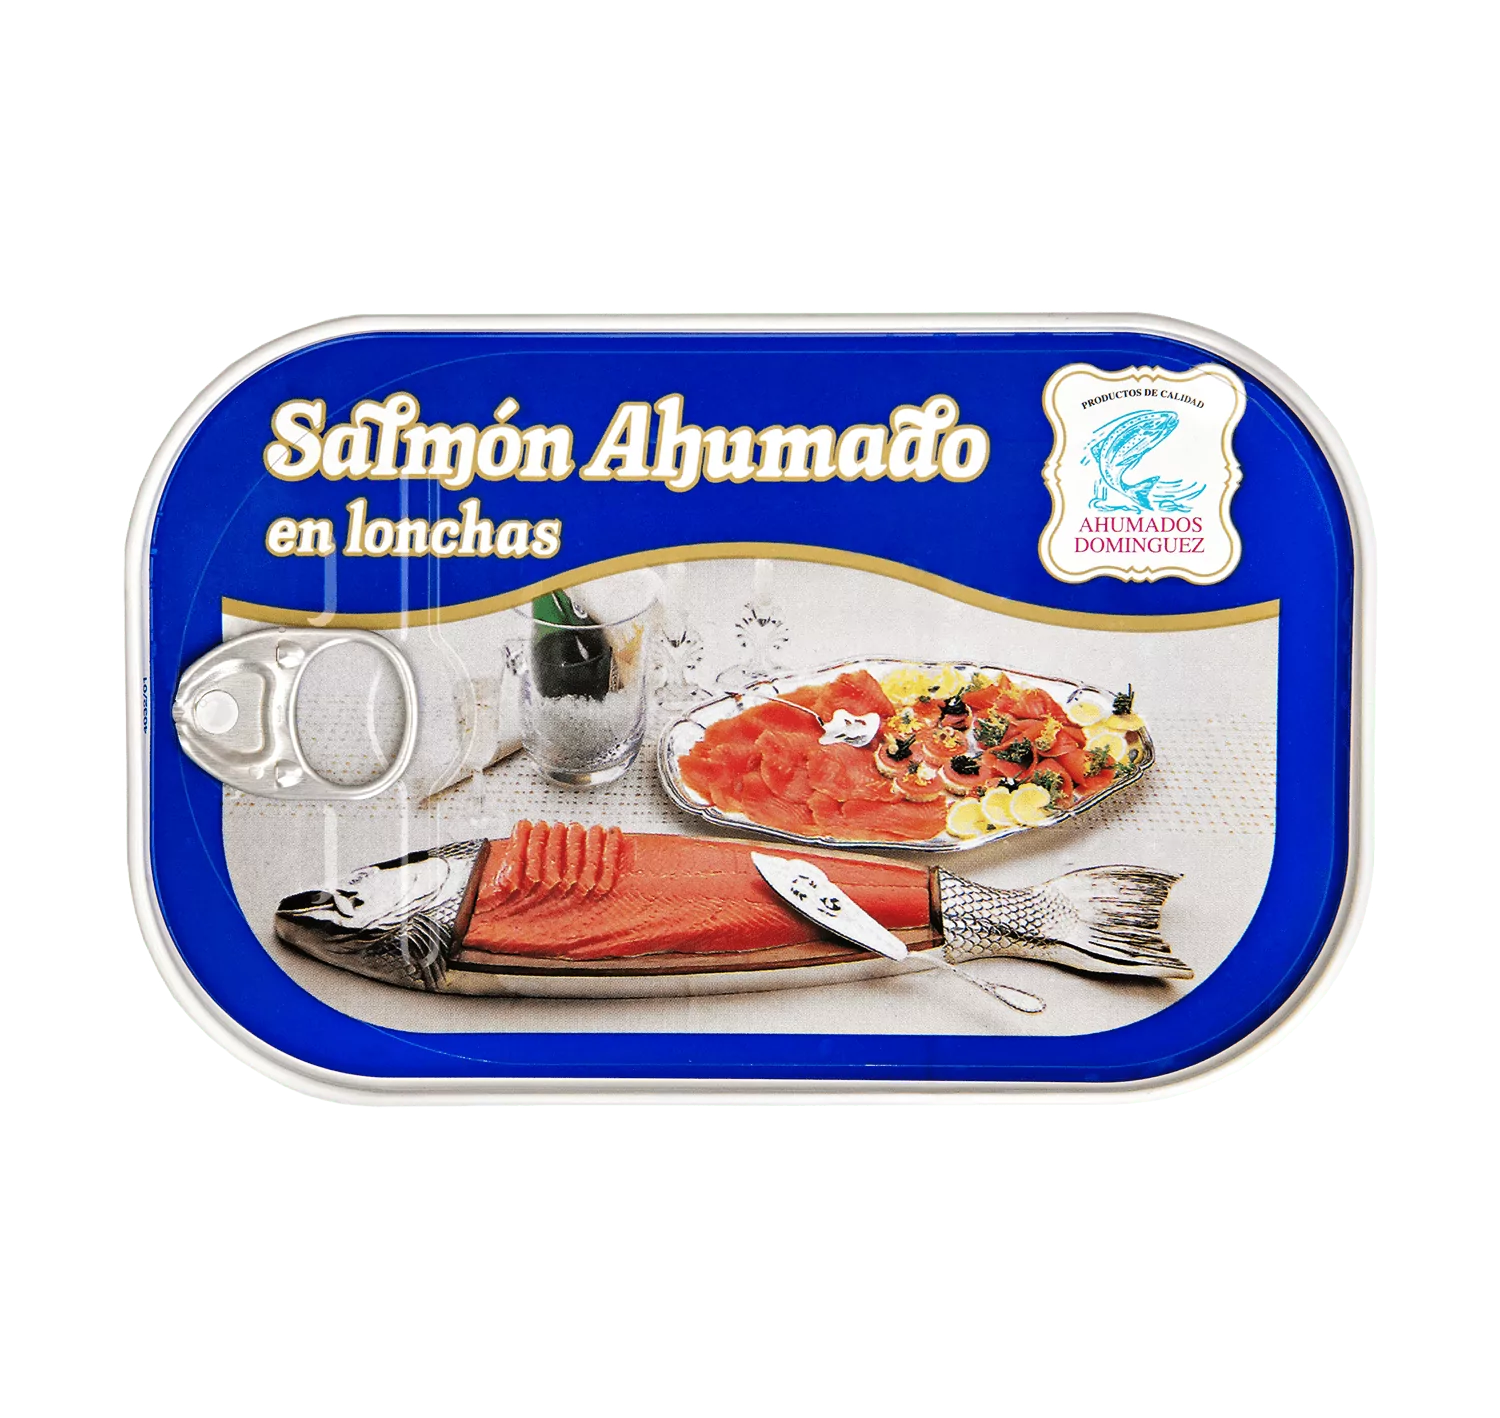 Lata salmon ahumado de Ahumados Dominguez